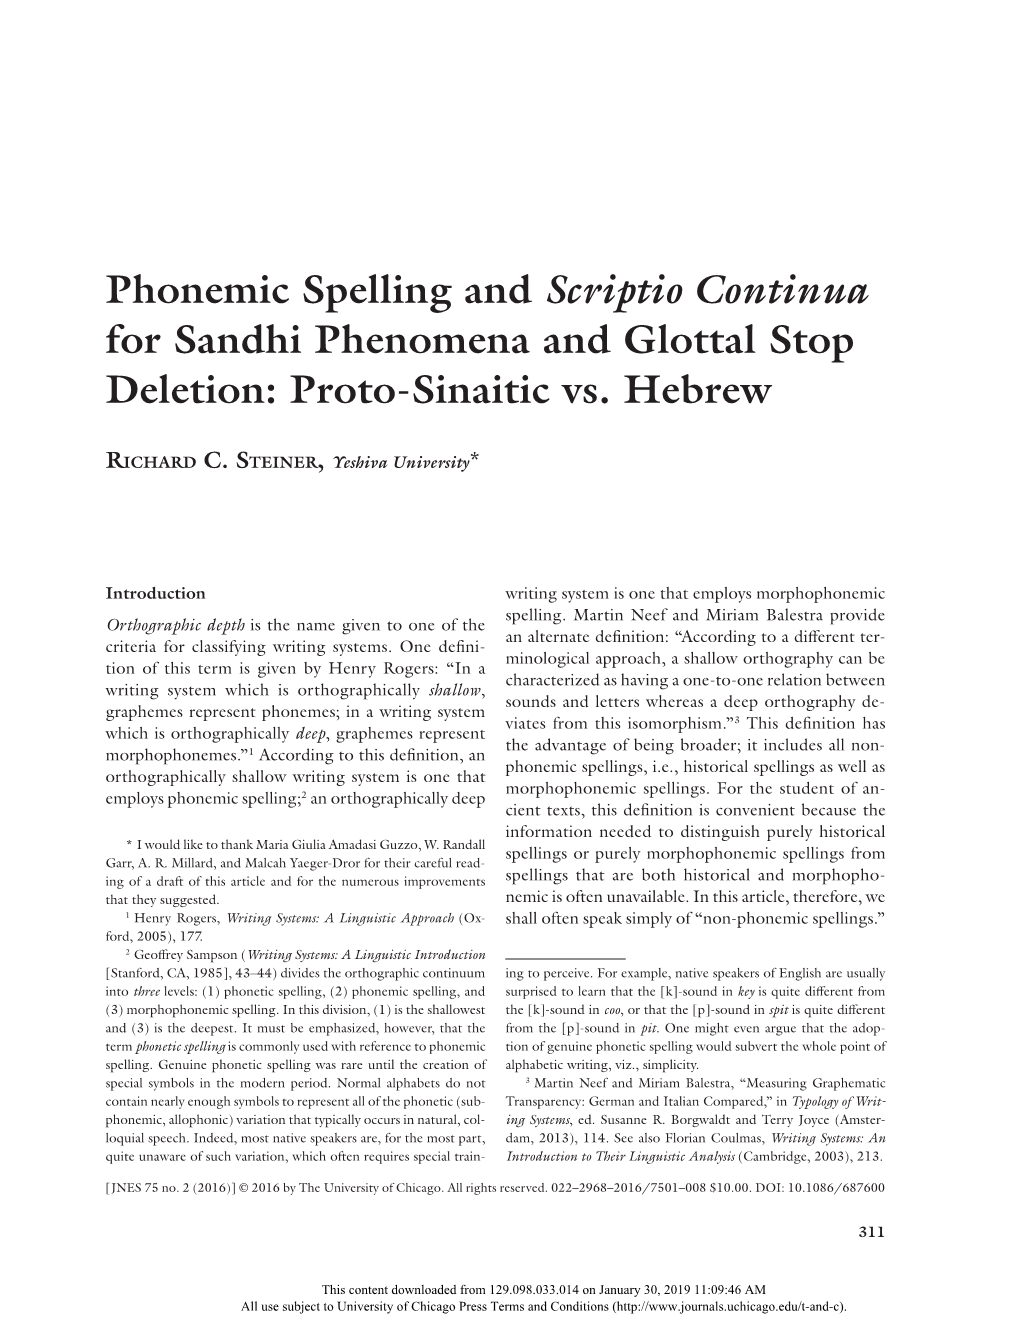 Phonemic Spelling and Scriptio Continua for Sandhi Phenomena and Glottal Stop Deletion: Proto-Sinaitic Vs